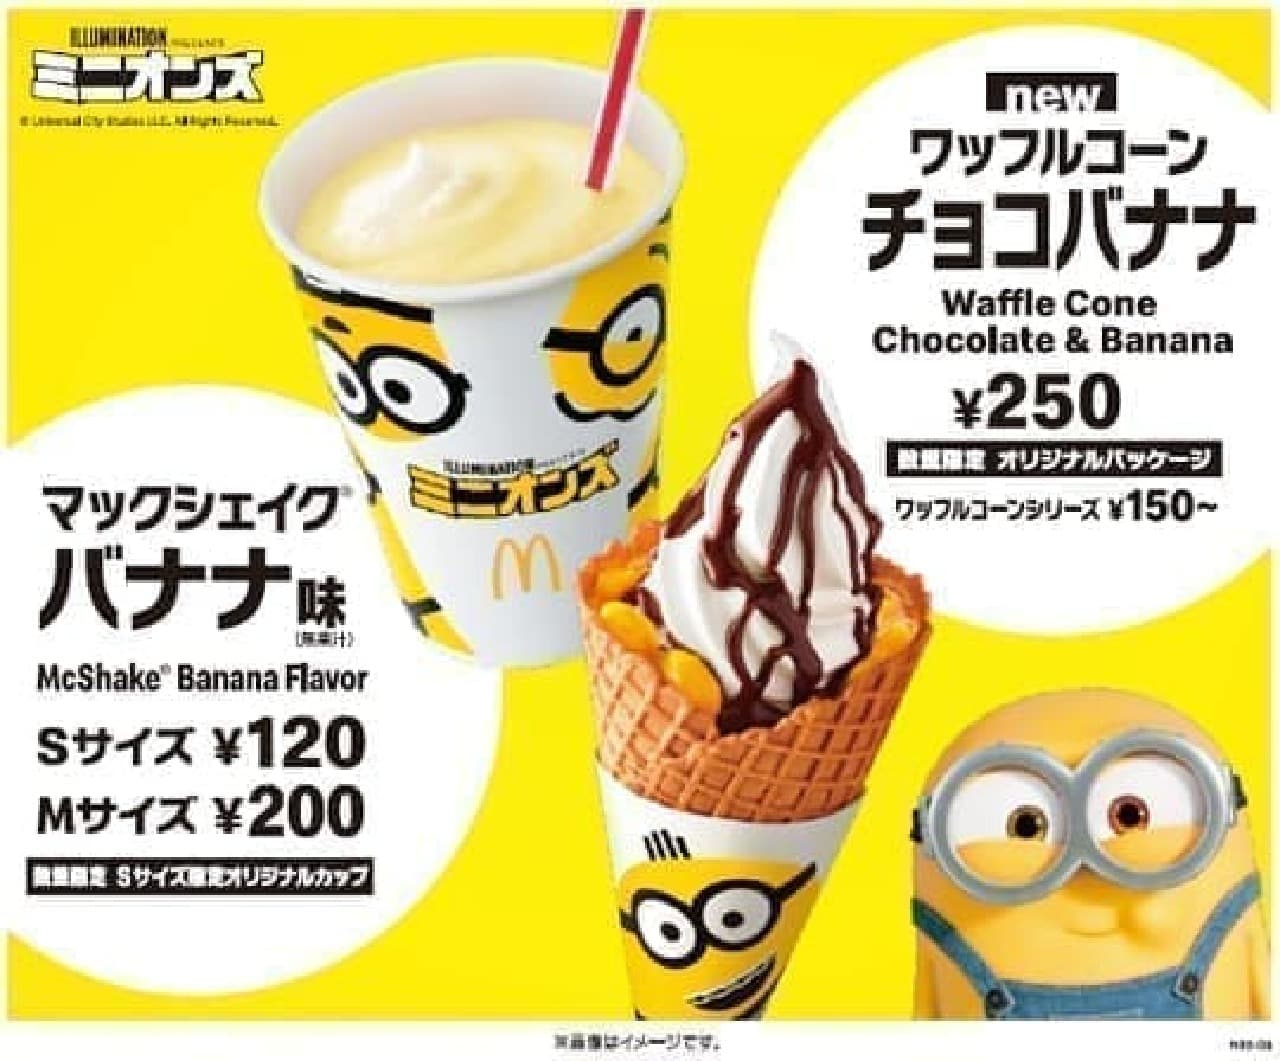 "McShake Banana Flavor" and "Waffle Corn Chocolate Banana" in collaboration with Minions